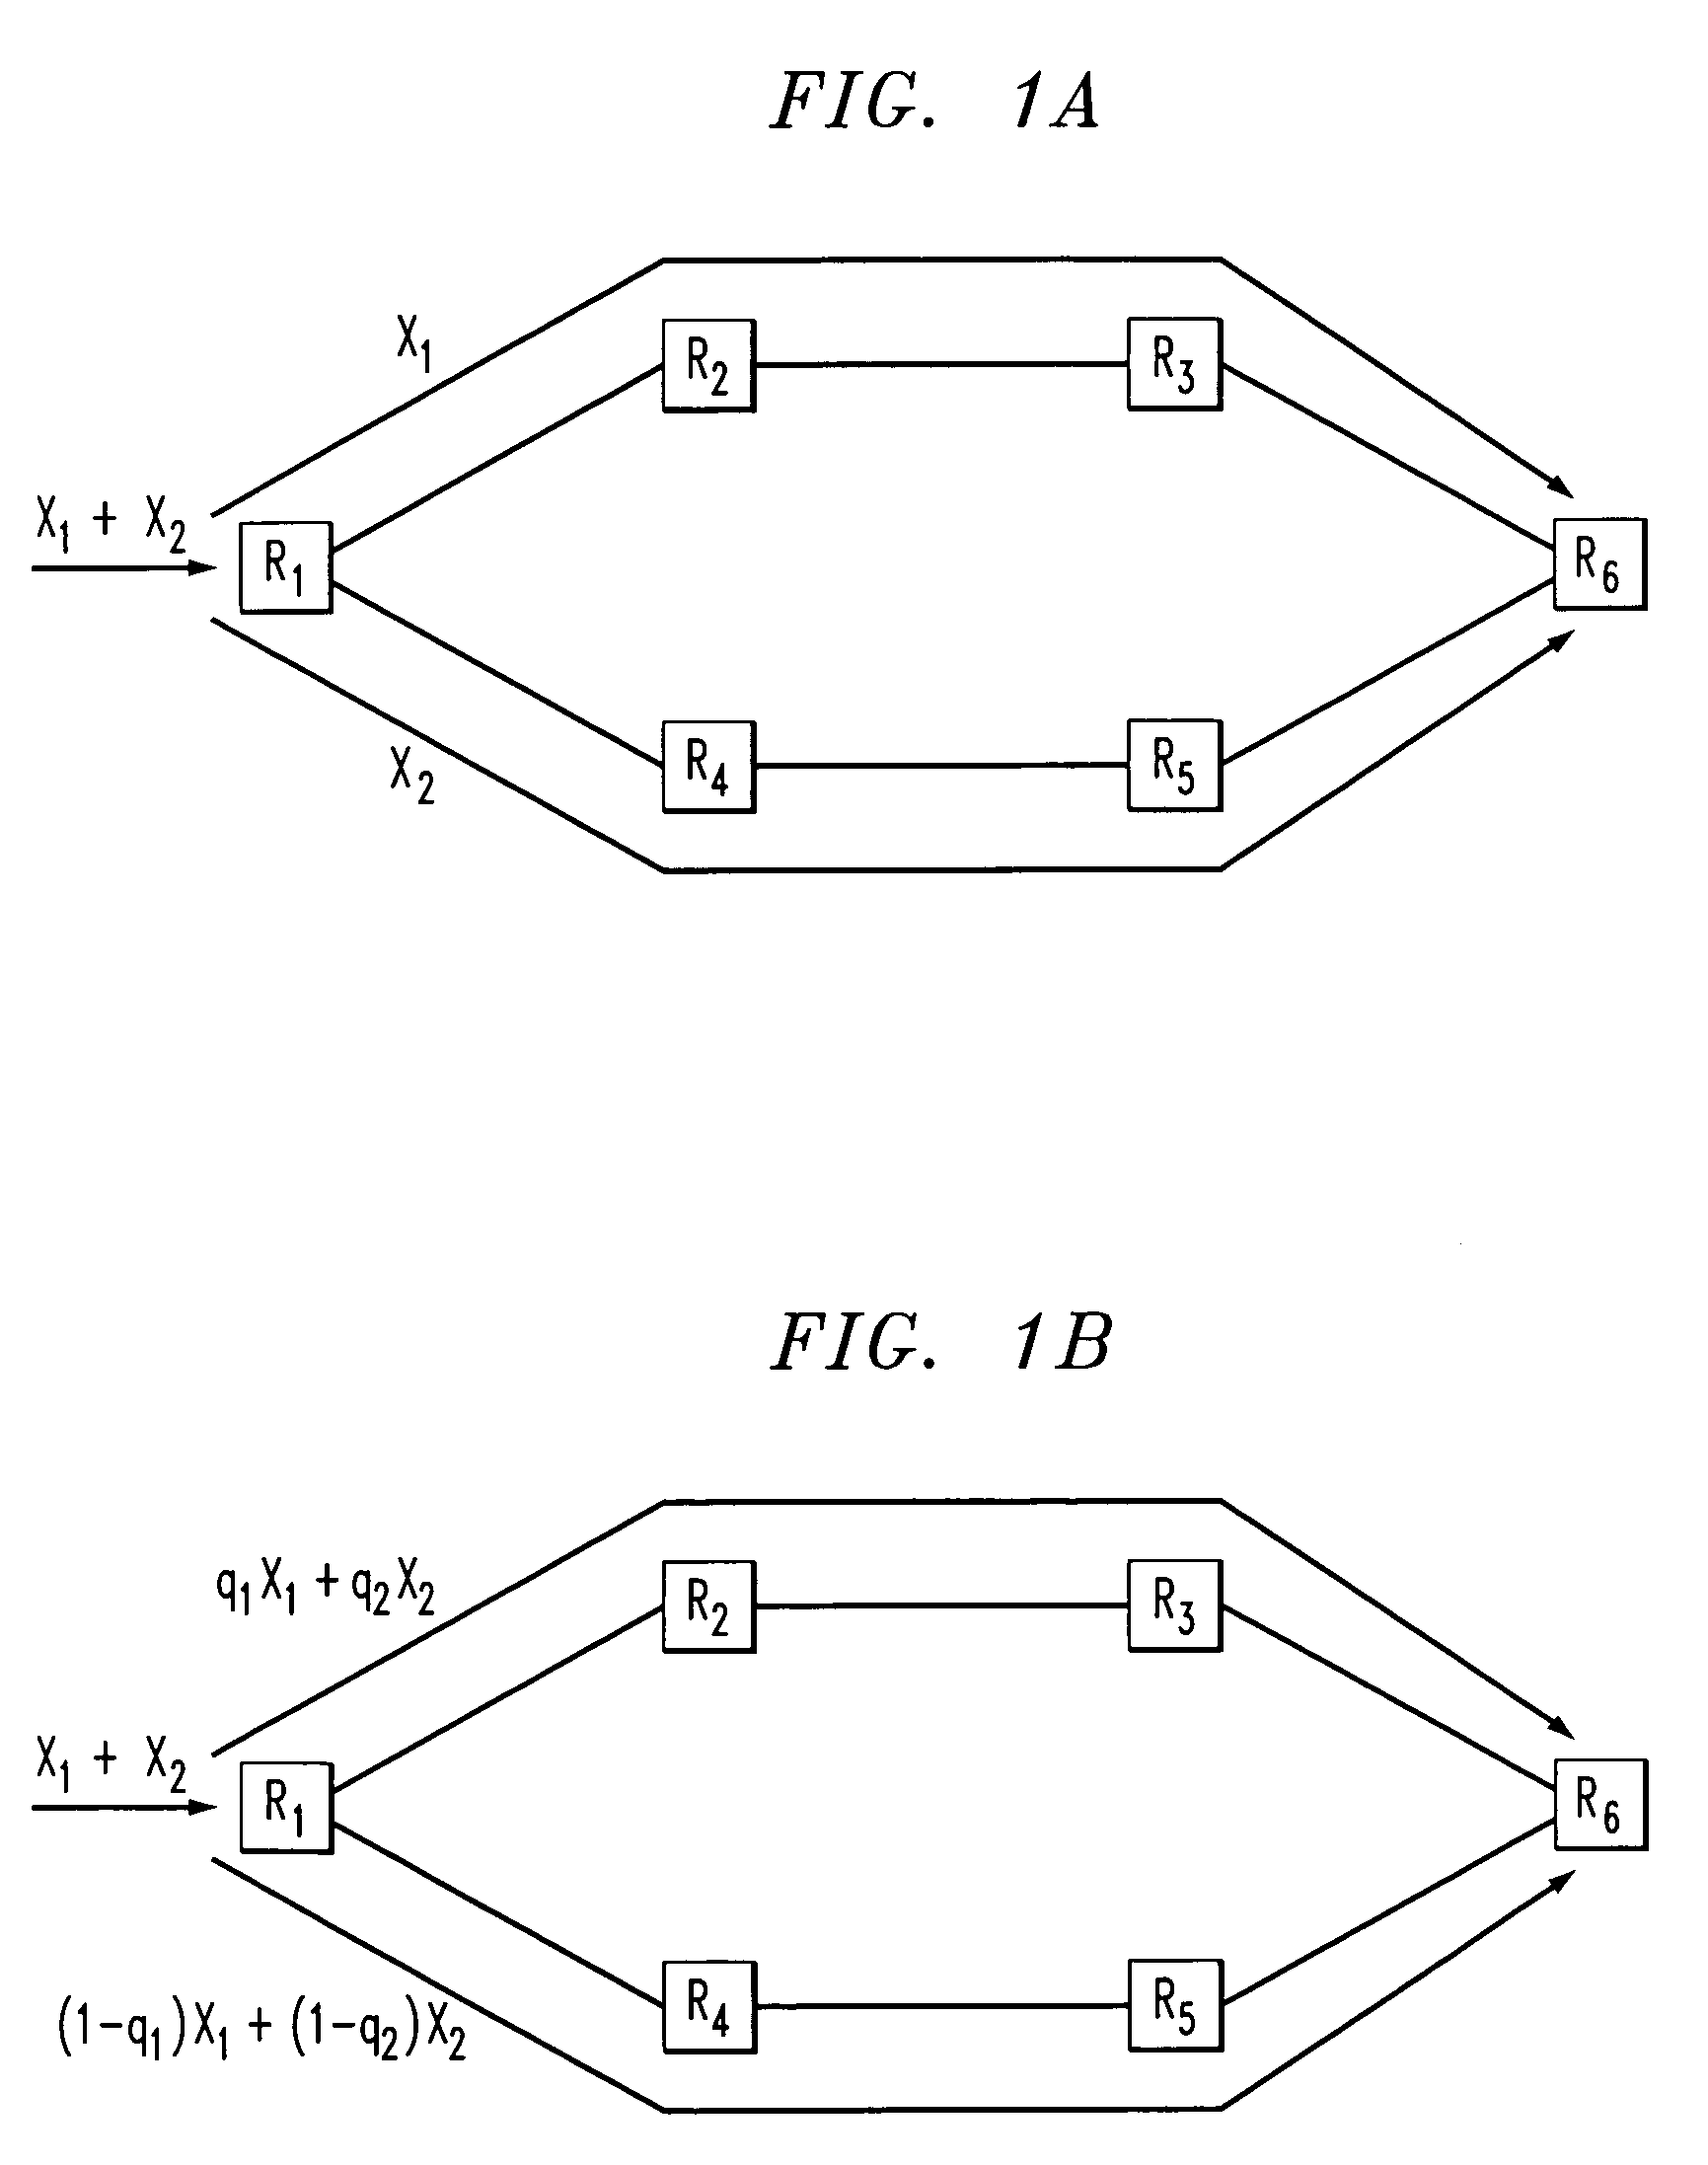 Multi-path routing using intra-flow splitting